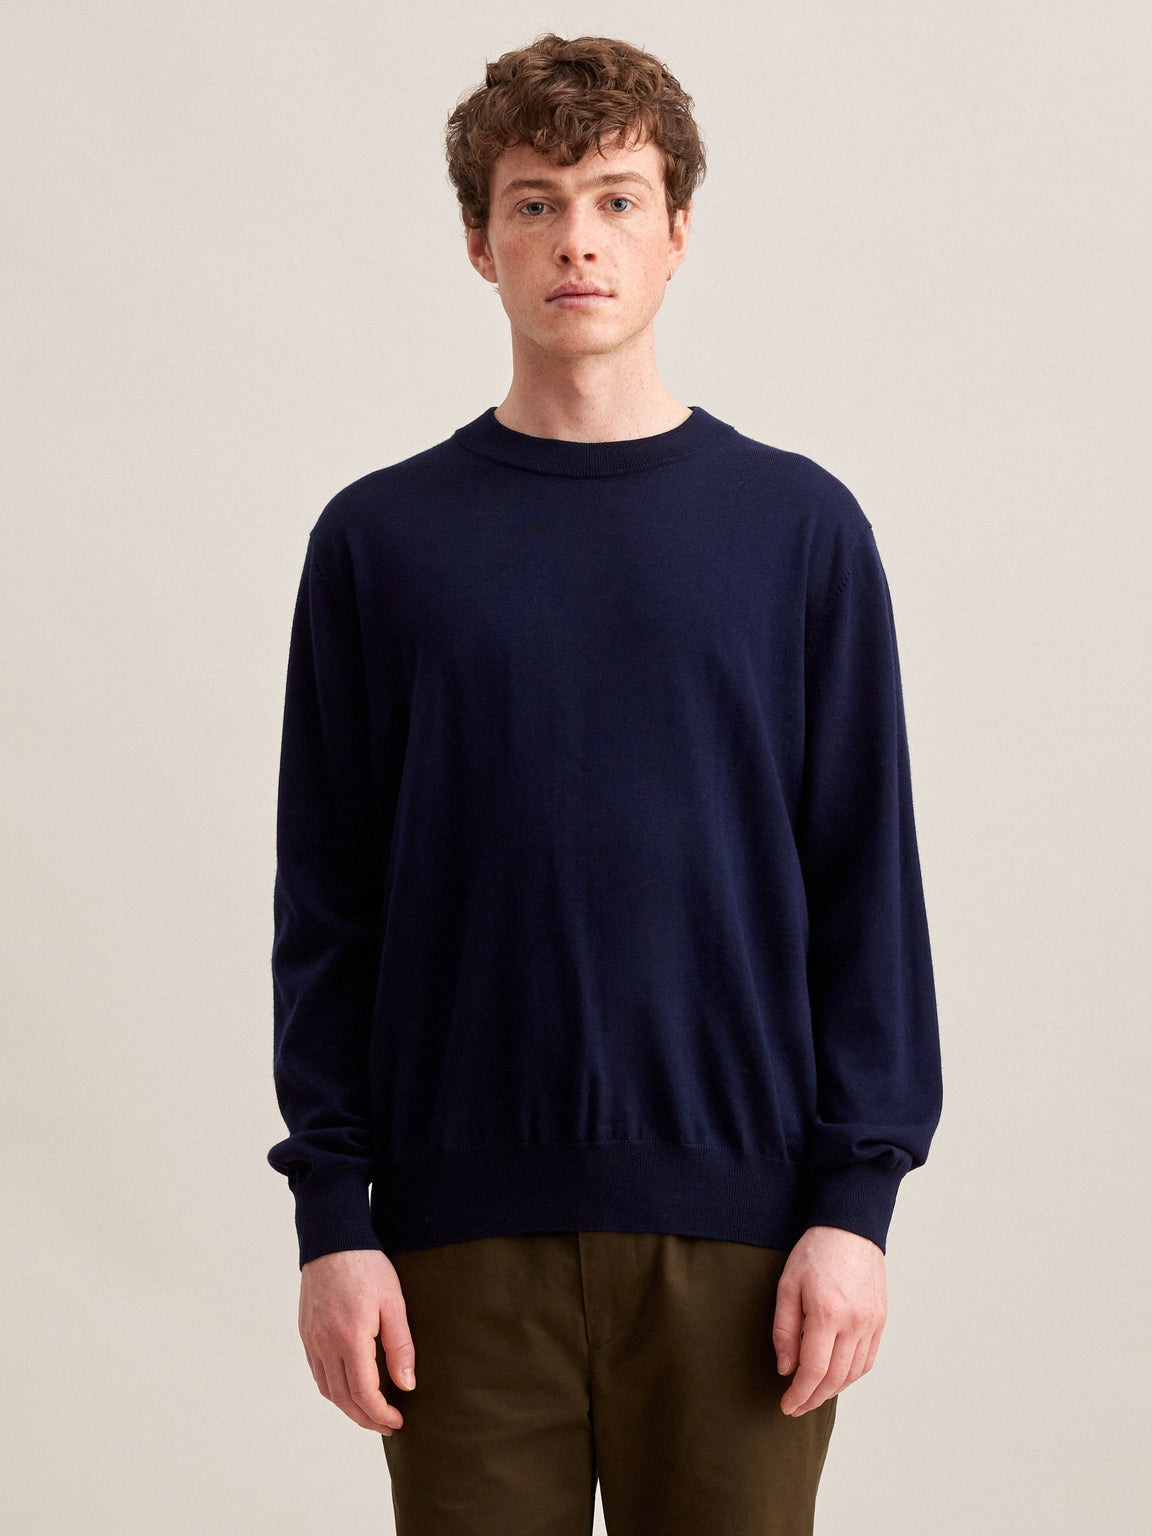 Dilliv sweater - Brown - Wool - Bellerose Men